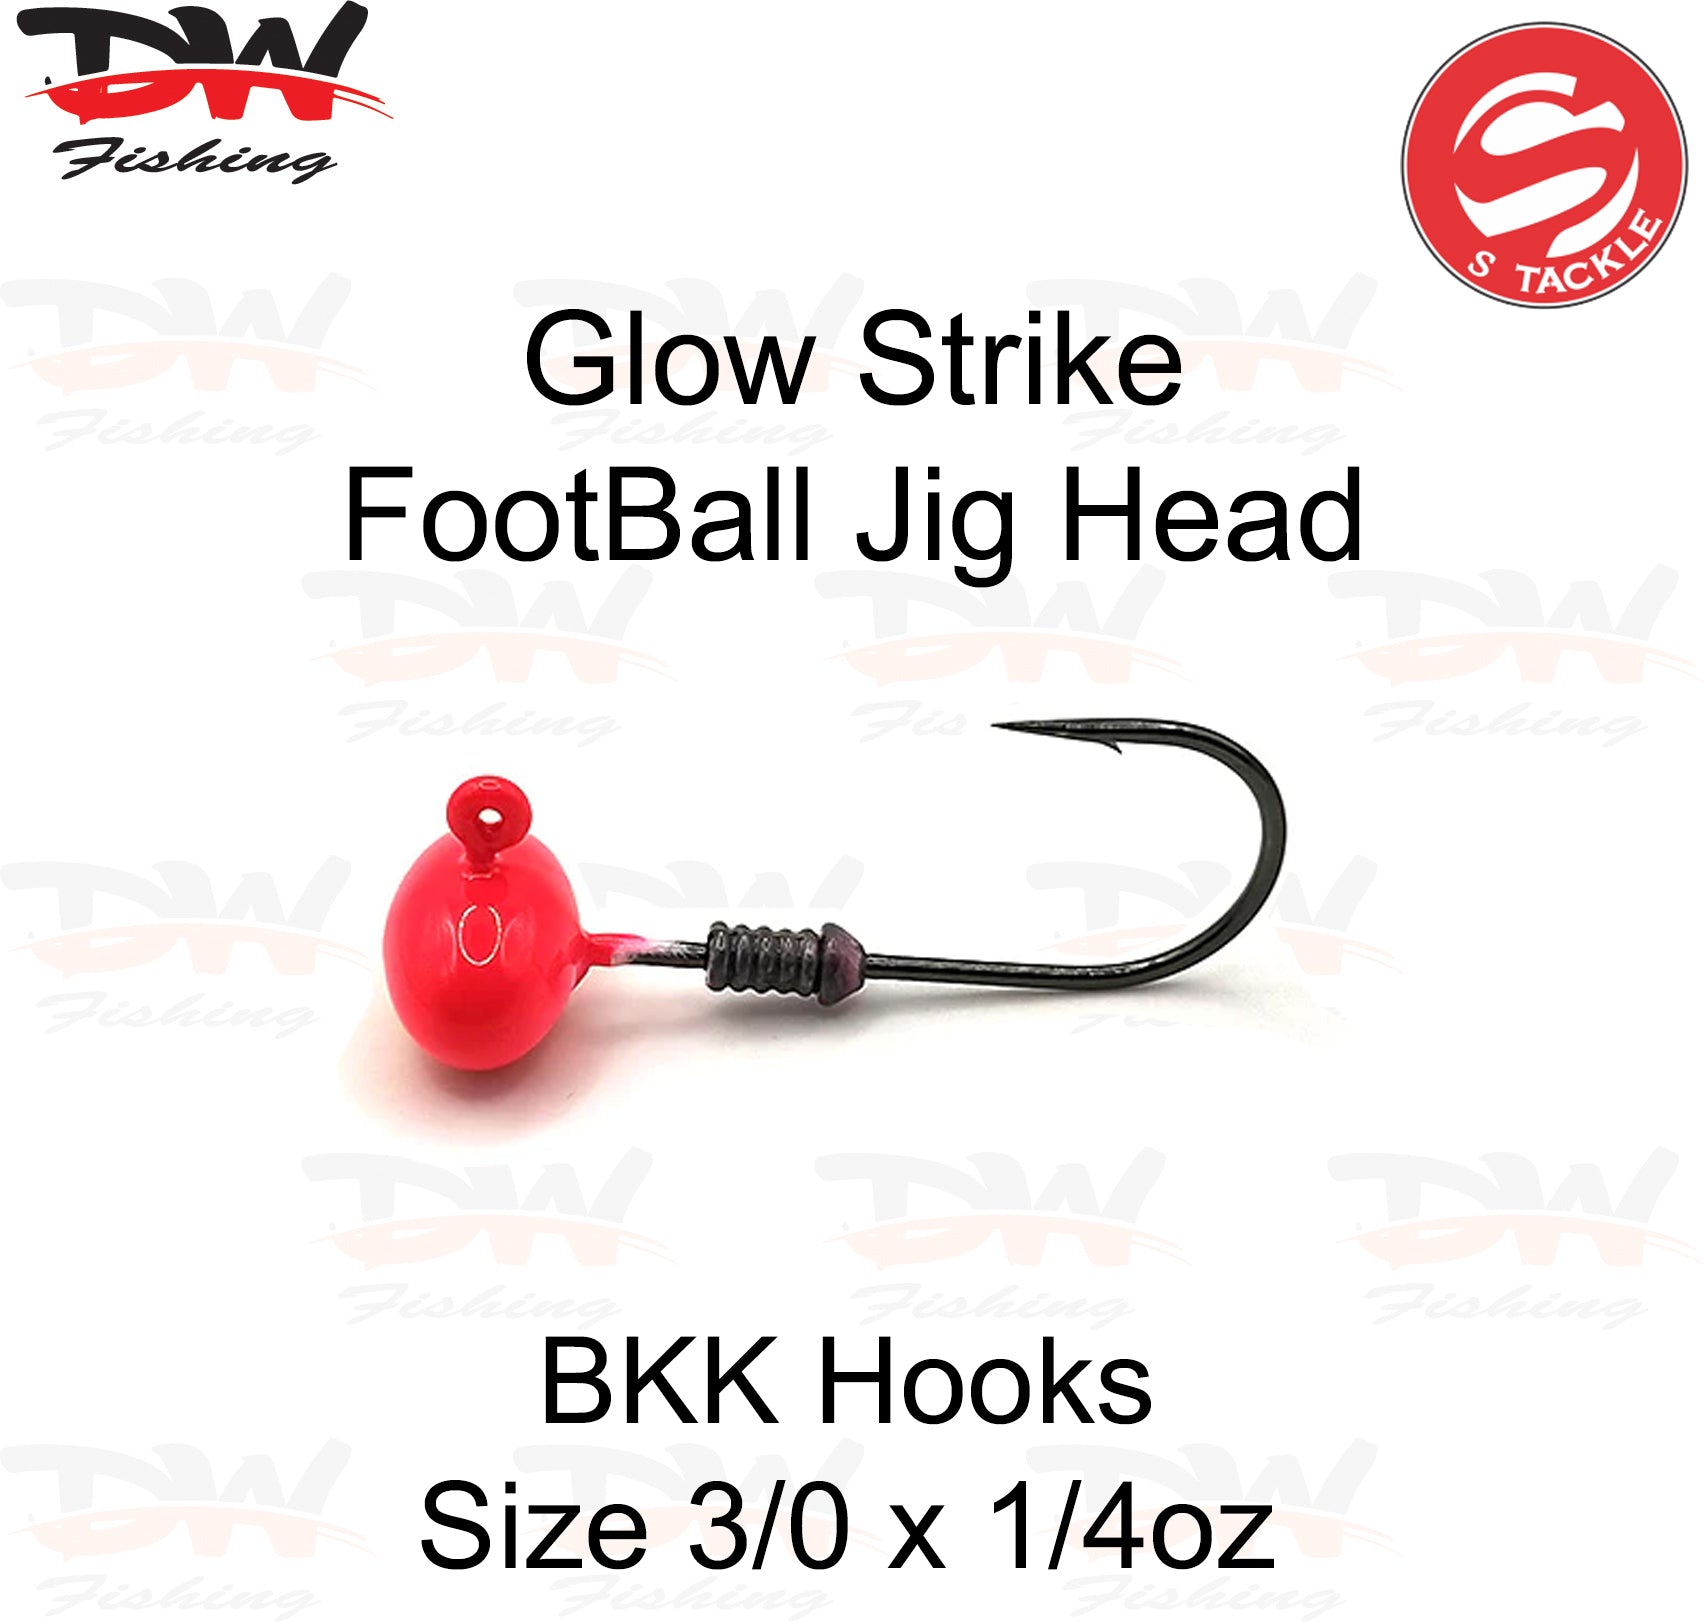 S Tackle Glow strike football jig head on BKK hooks size 3/0 1/4oz